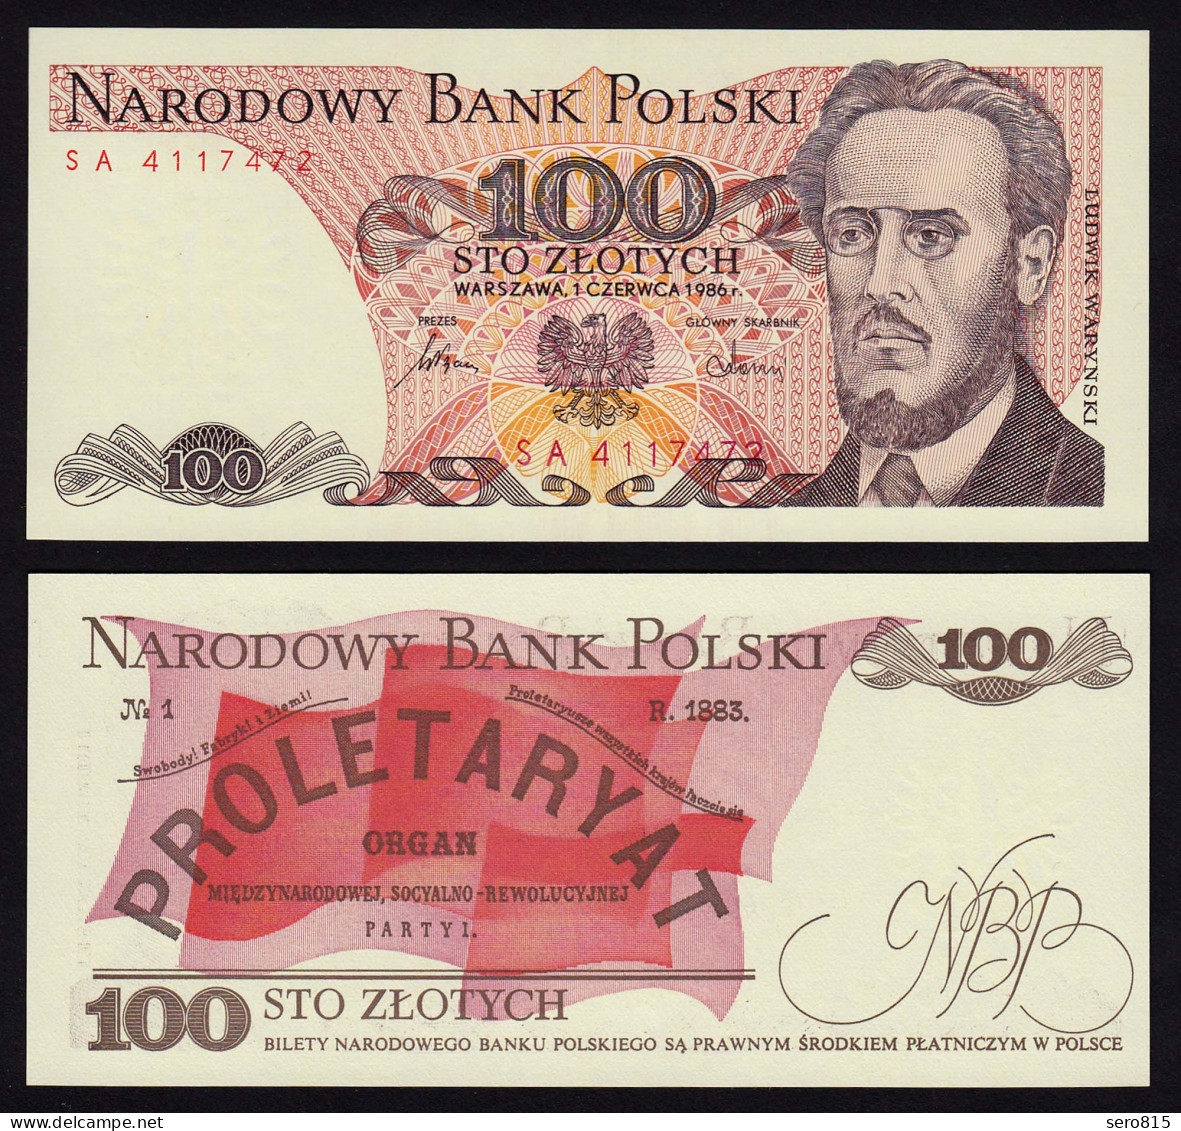 Polen - Poland - 100 Zlotych Banknote 1986 UNC Pick 143e  (16223 - Poland